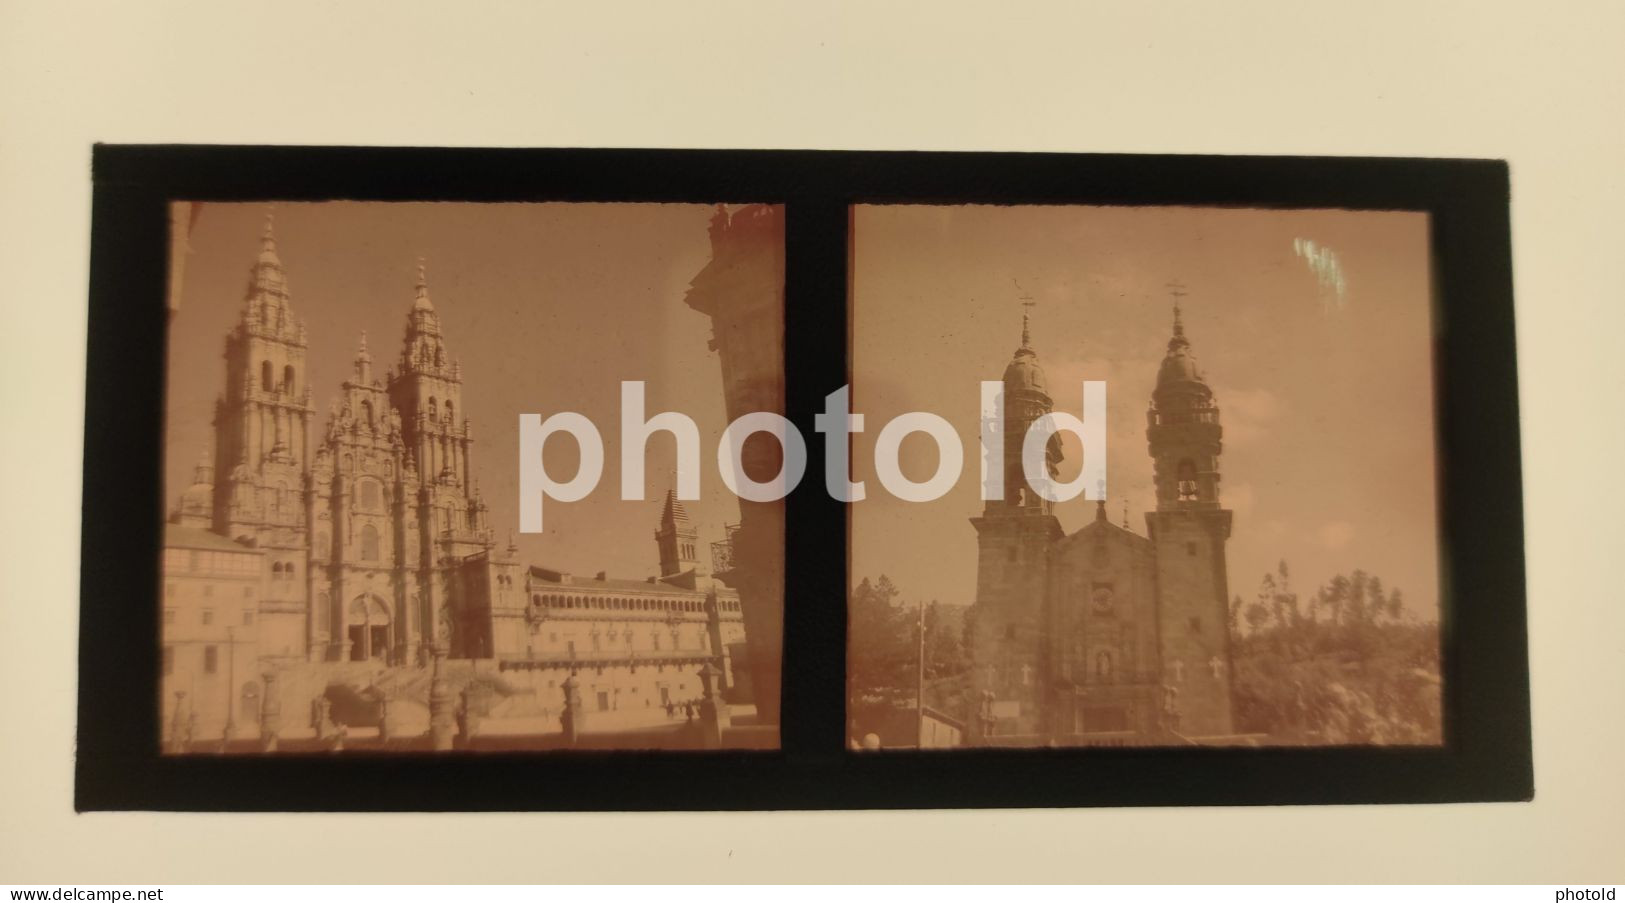 40s SANTIAGO COMPOSTELA GALICIA ESPANA SPAIN LARGE 60mm W GLASS DIAPOSITIVE SLIDE NO PHOTO FOTO - Diapositives